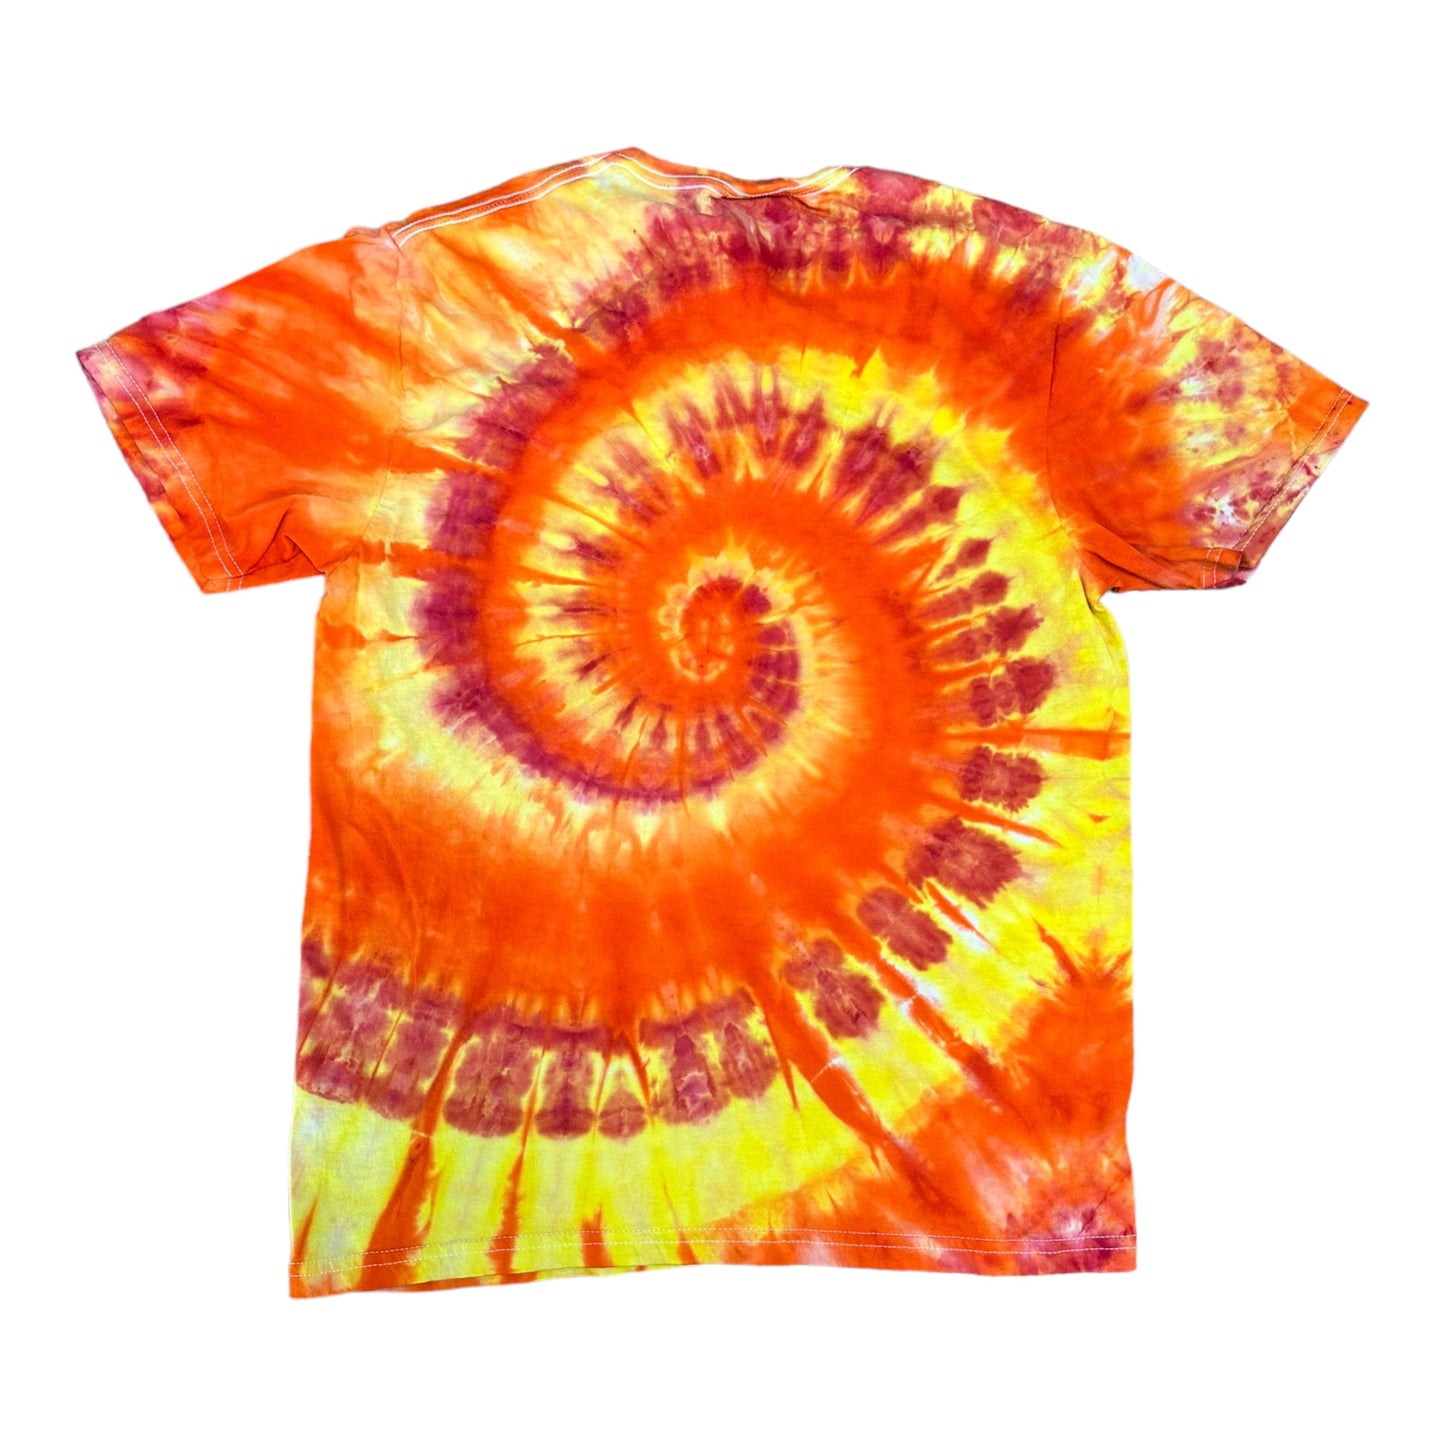 Adult Medium Red Orange and Yellow Spiral Ice Dye Tie Dye Shirt